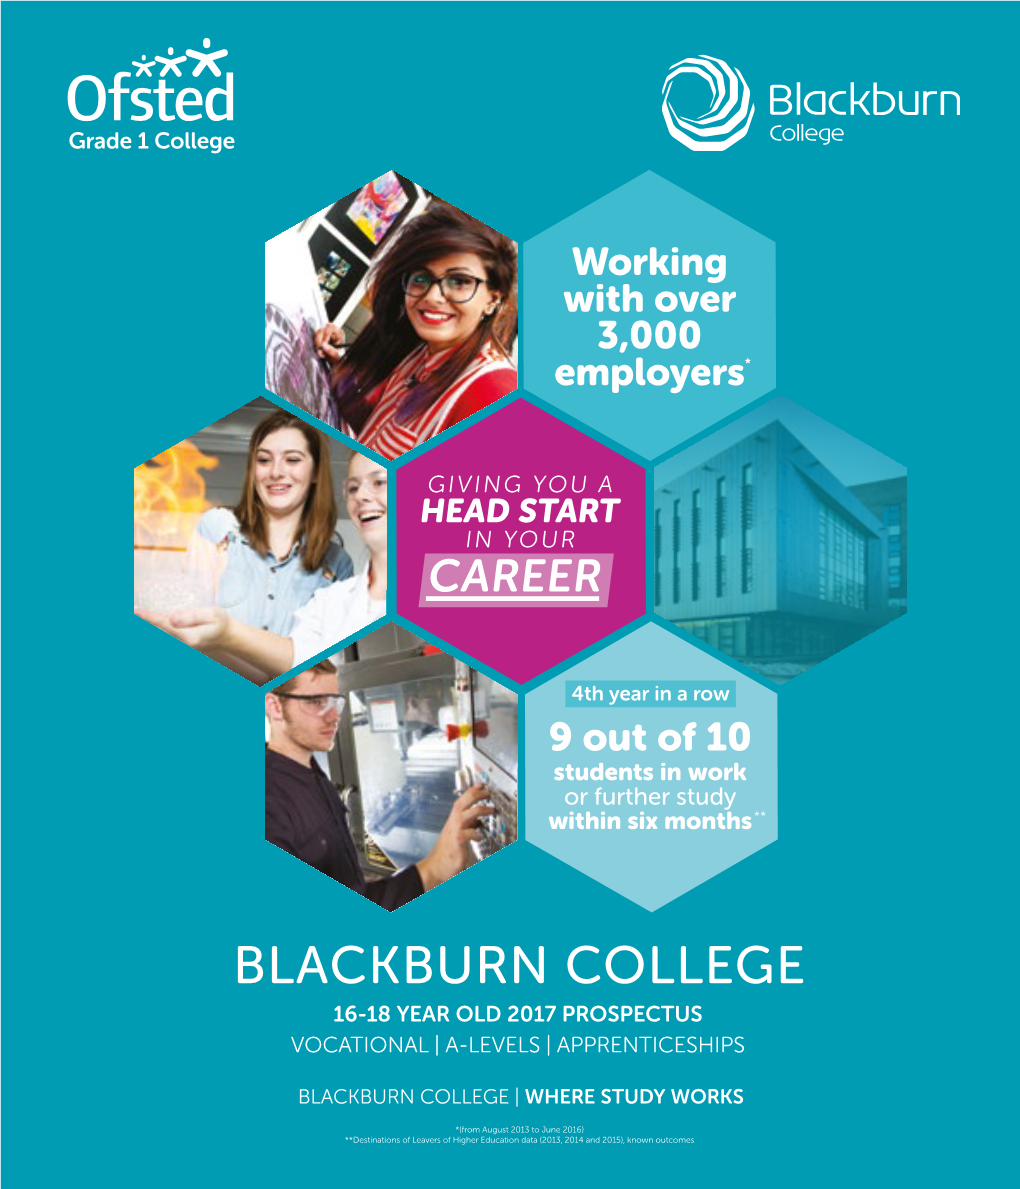 Blackburn College 16-18 Year Old 2017 Prospectus Vocational | A-Levels | Apprenticeships